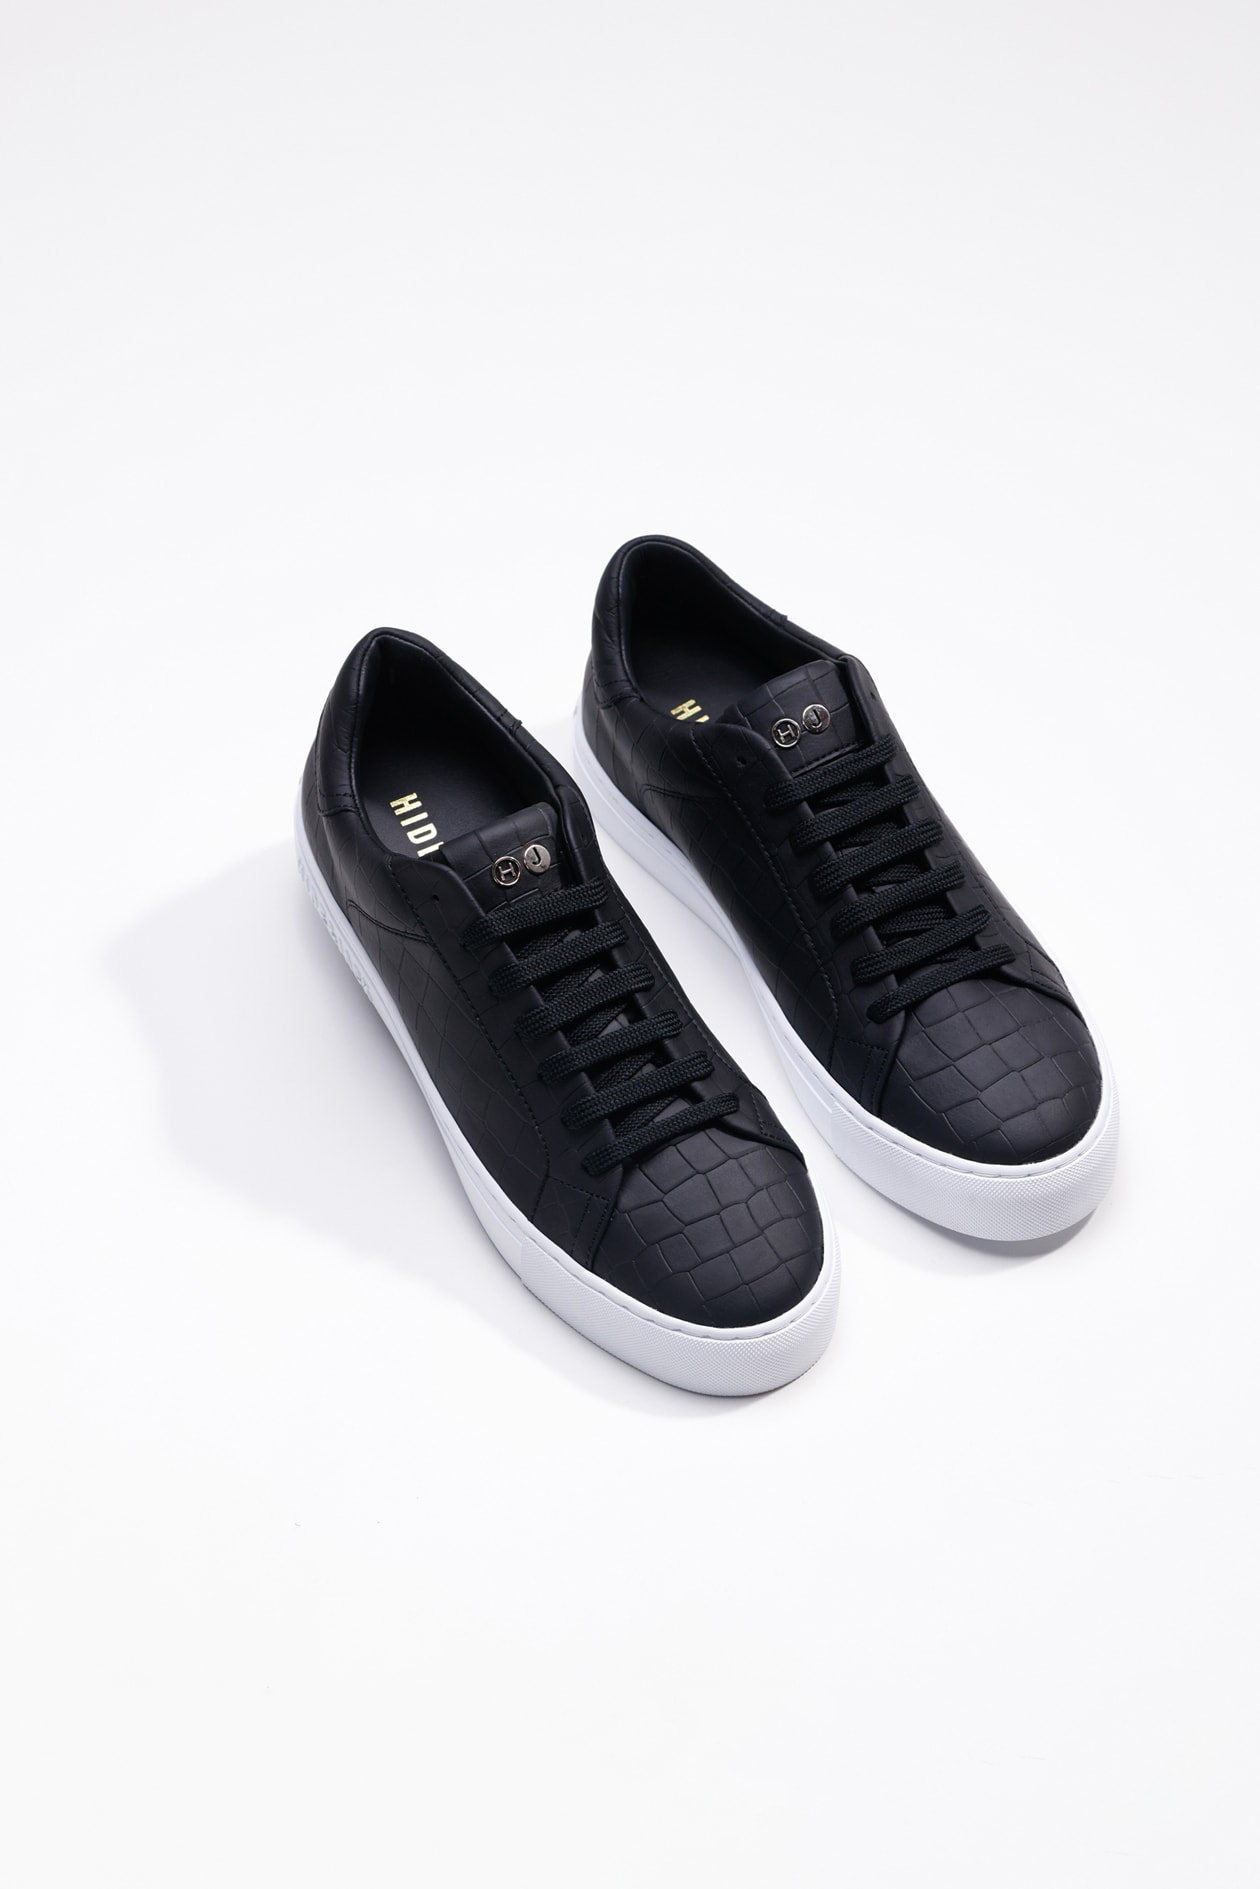 Hide & Jack Low Top Sneaker - Essence Black White